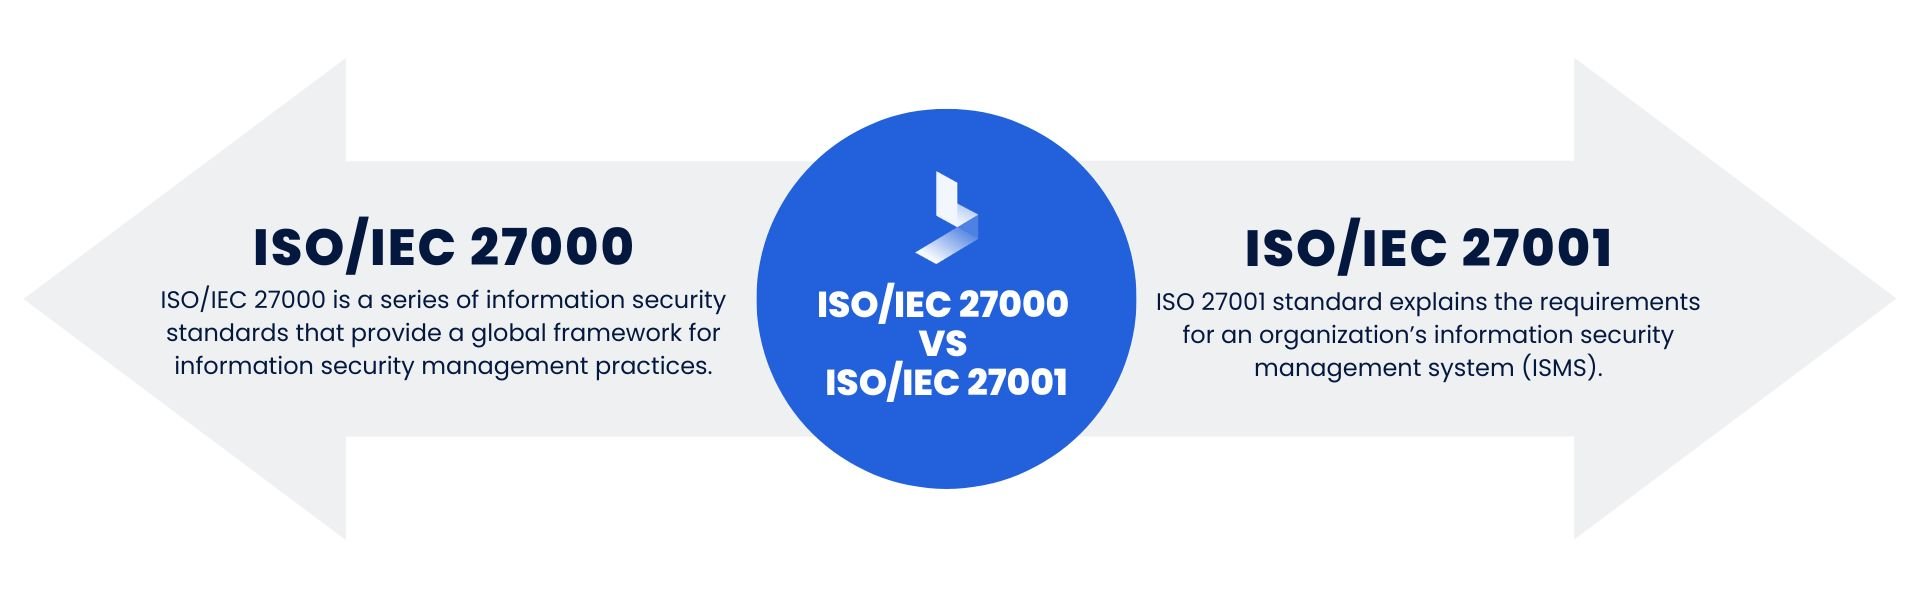 ISOIEC 27000 vs ISOIEC 27001